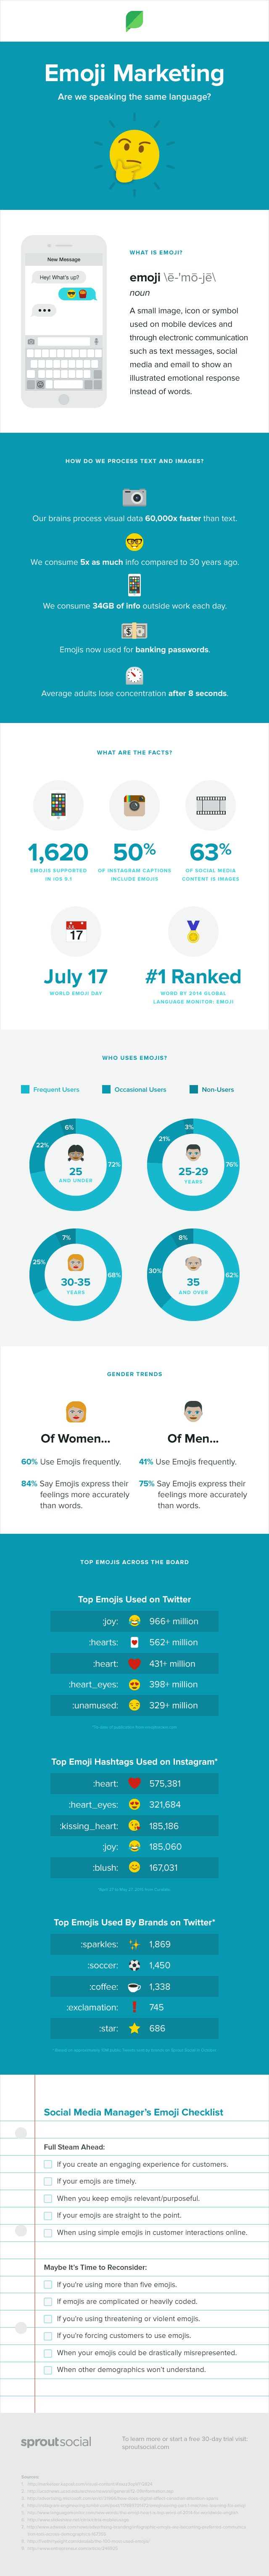  infographie emoji marketing